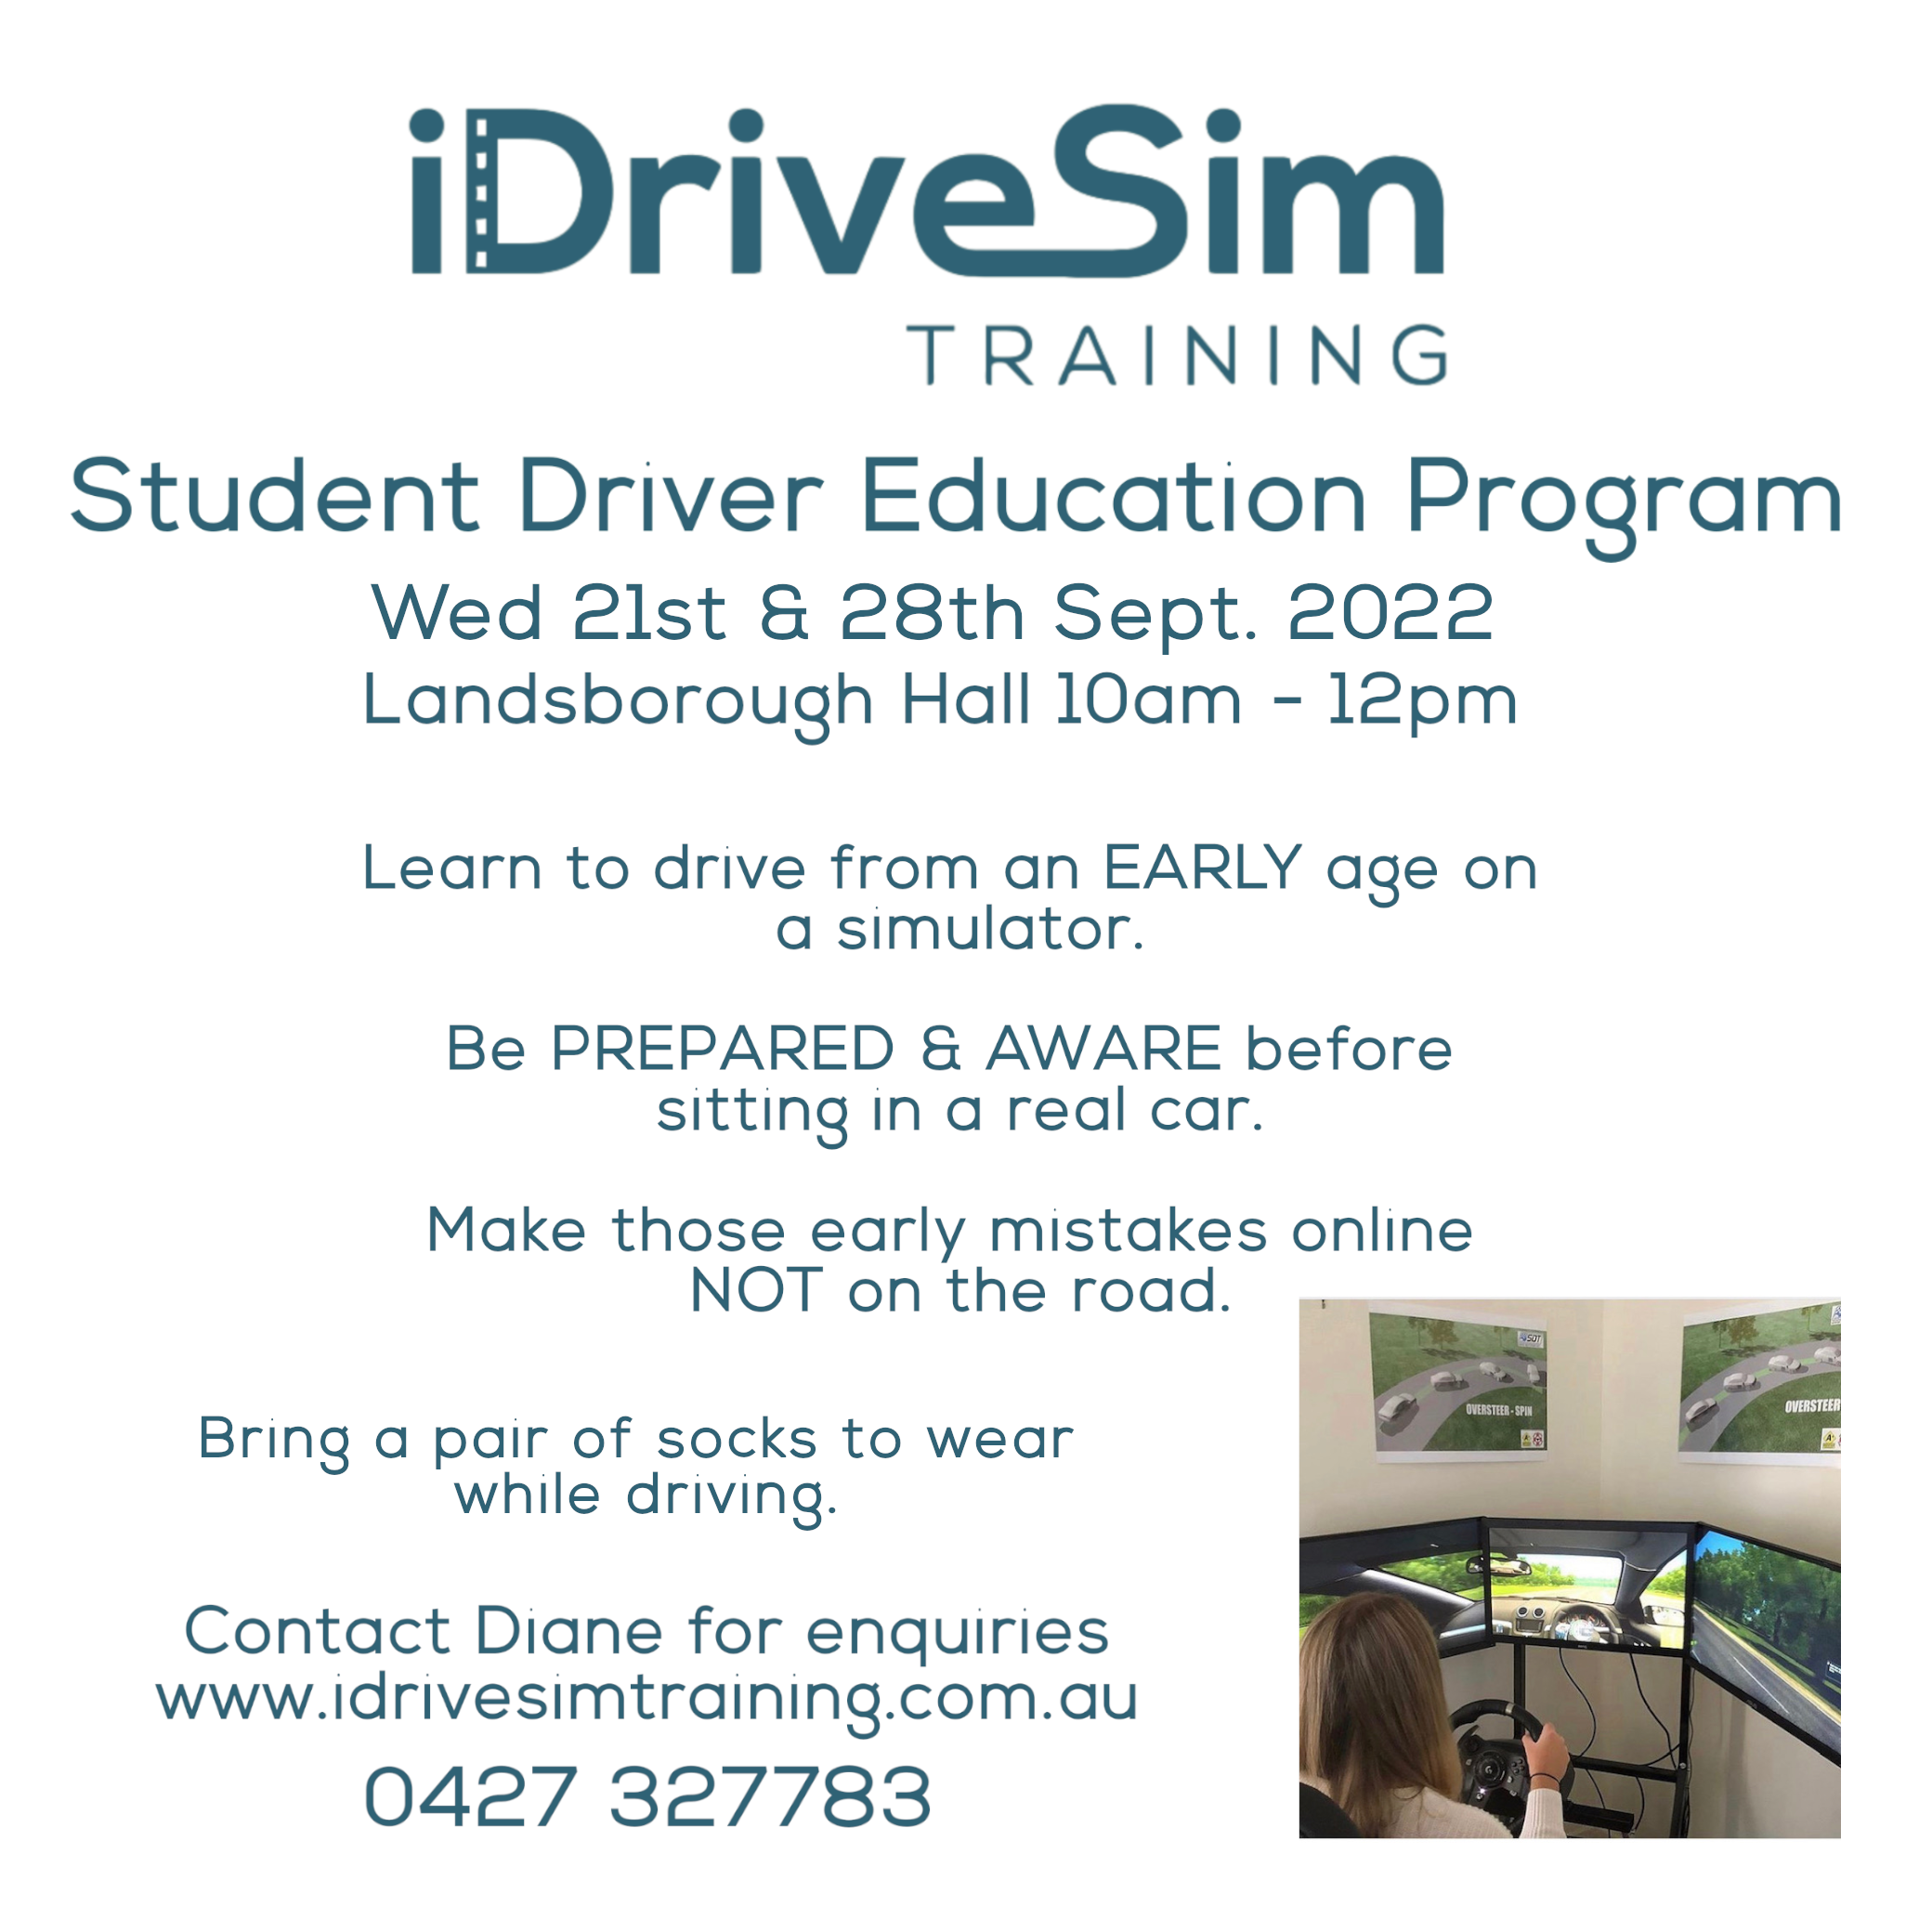 iDriveSim Training- Student Driver Education Program